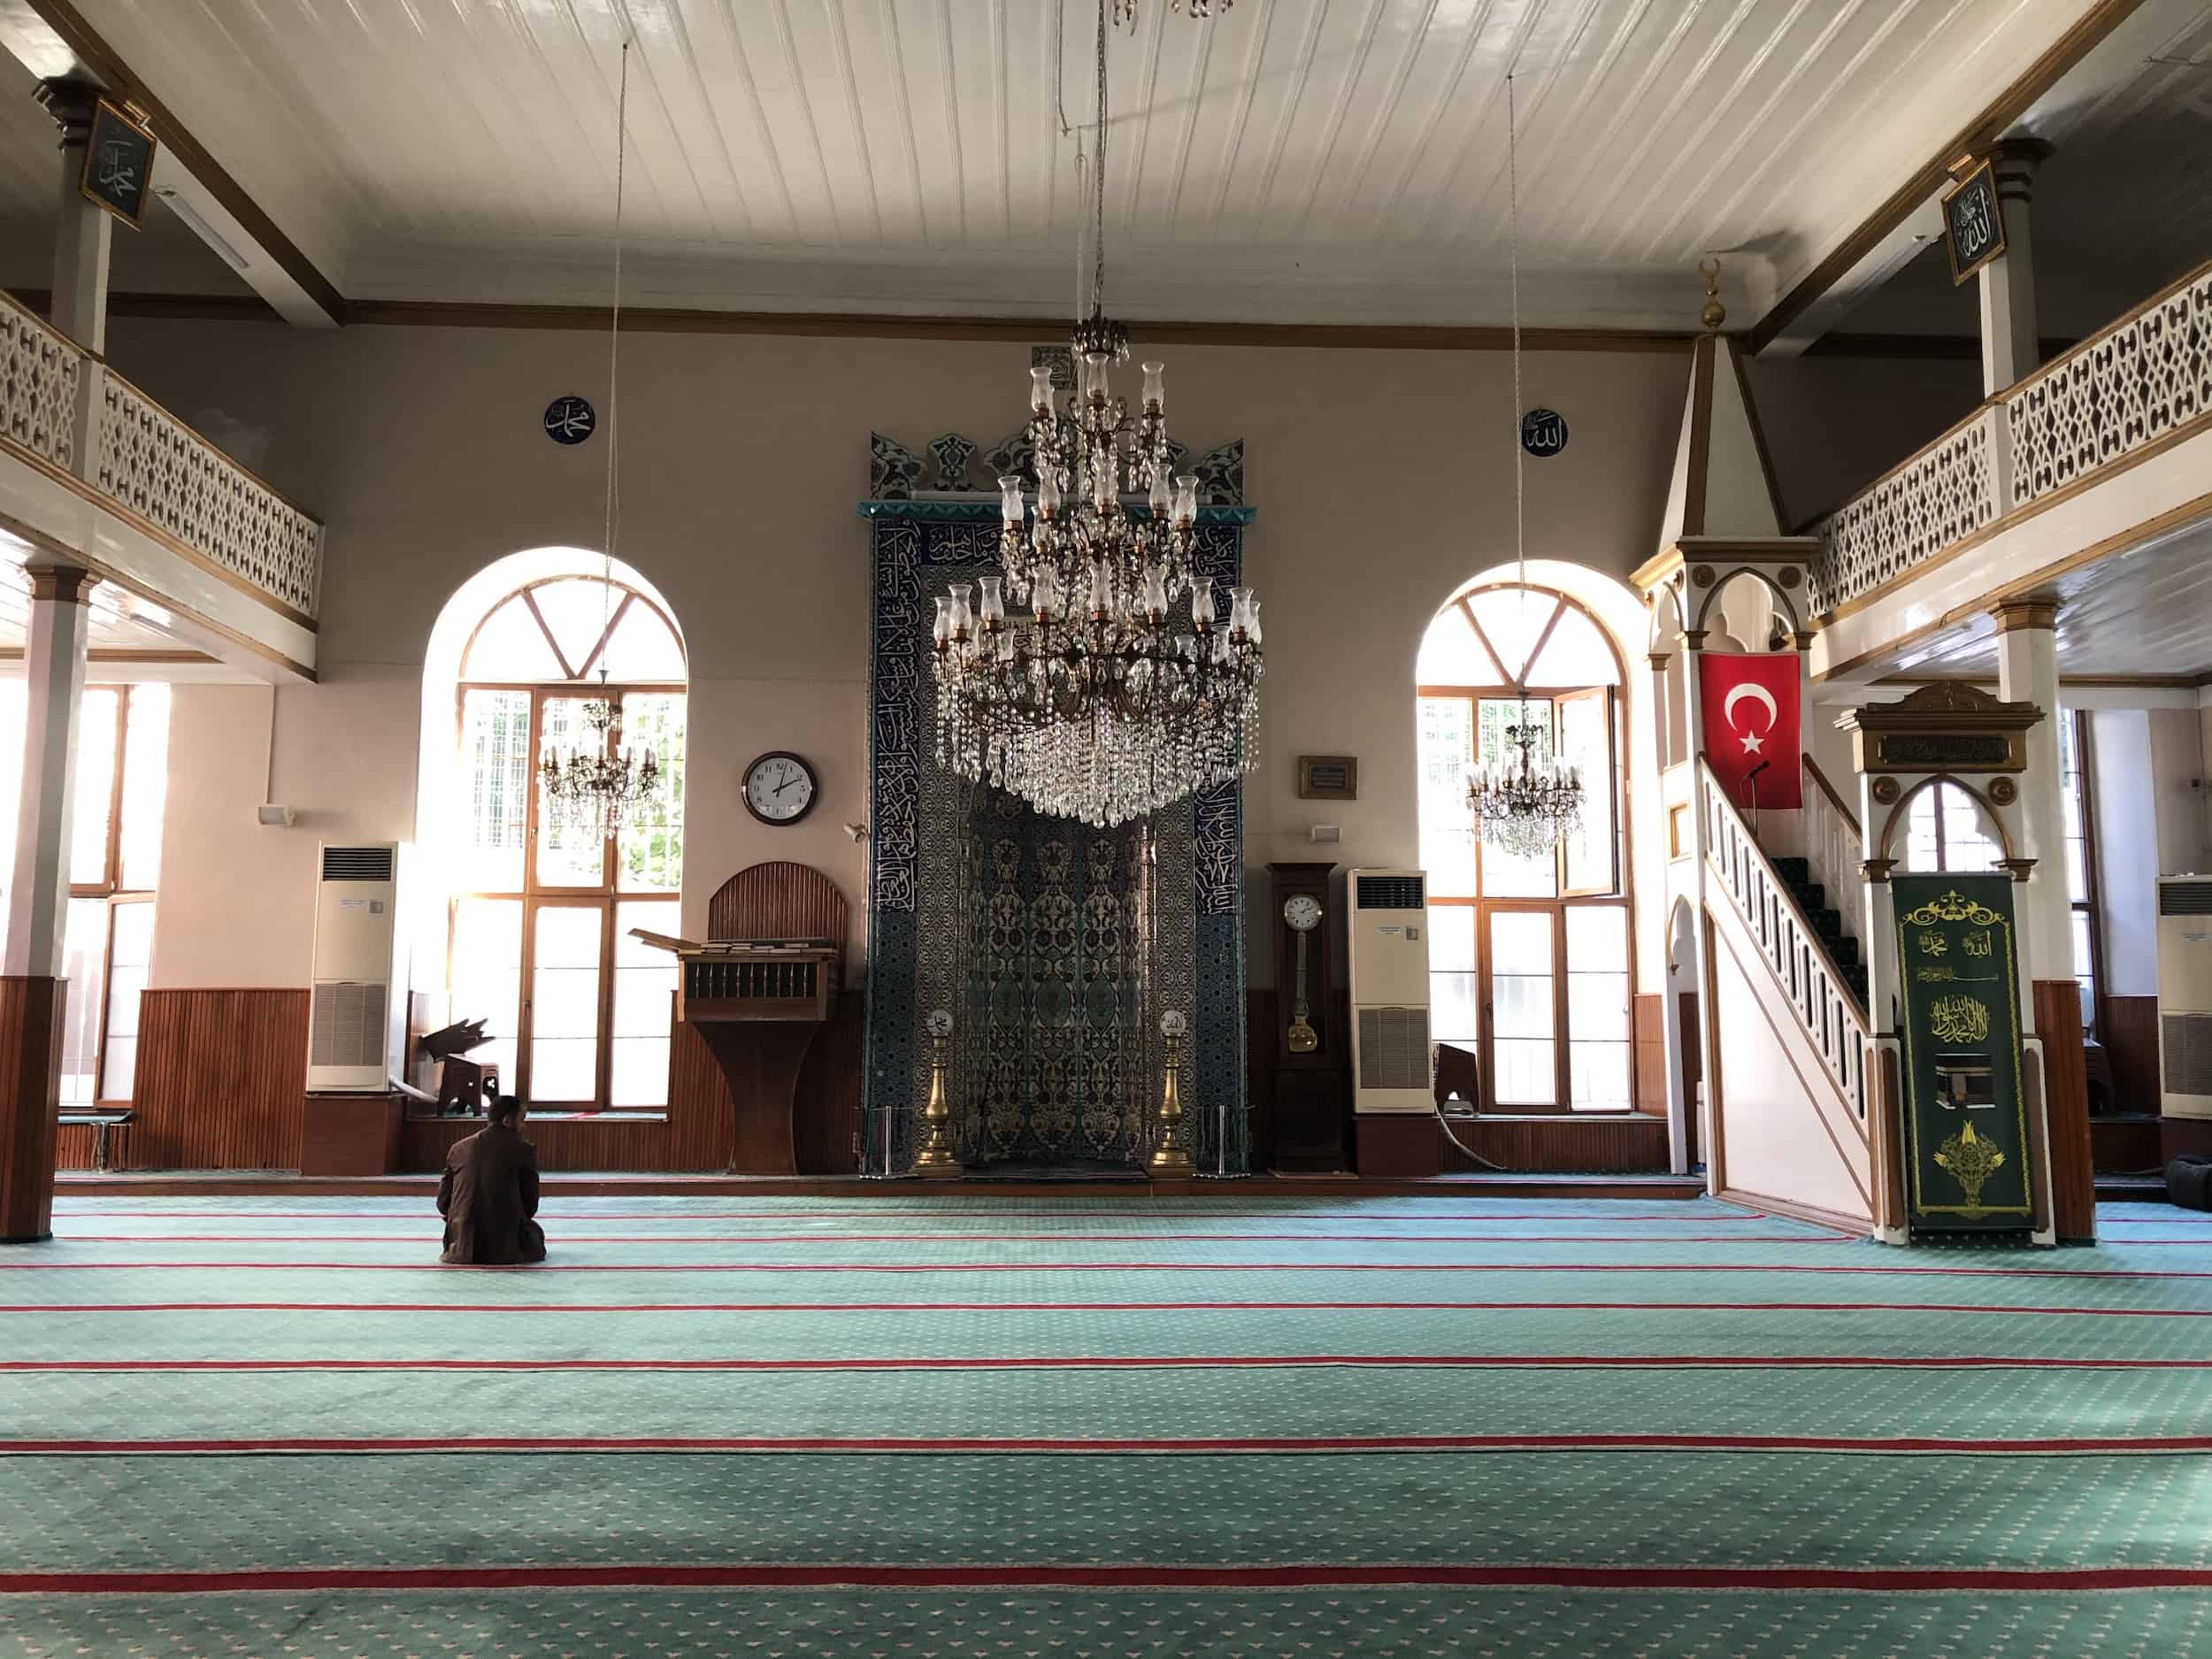 Hoca Pasha Mosque in Sirkeci, Istanbul, Turkey